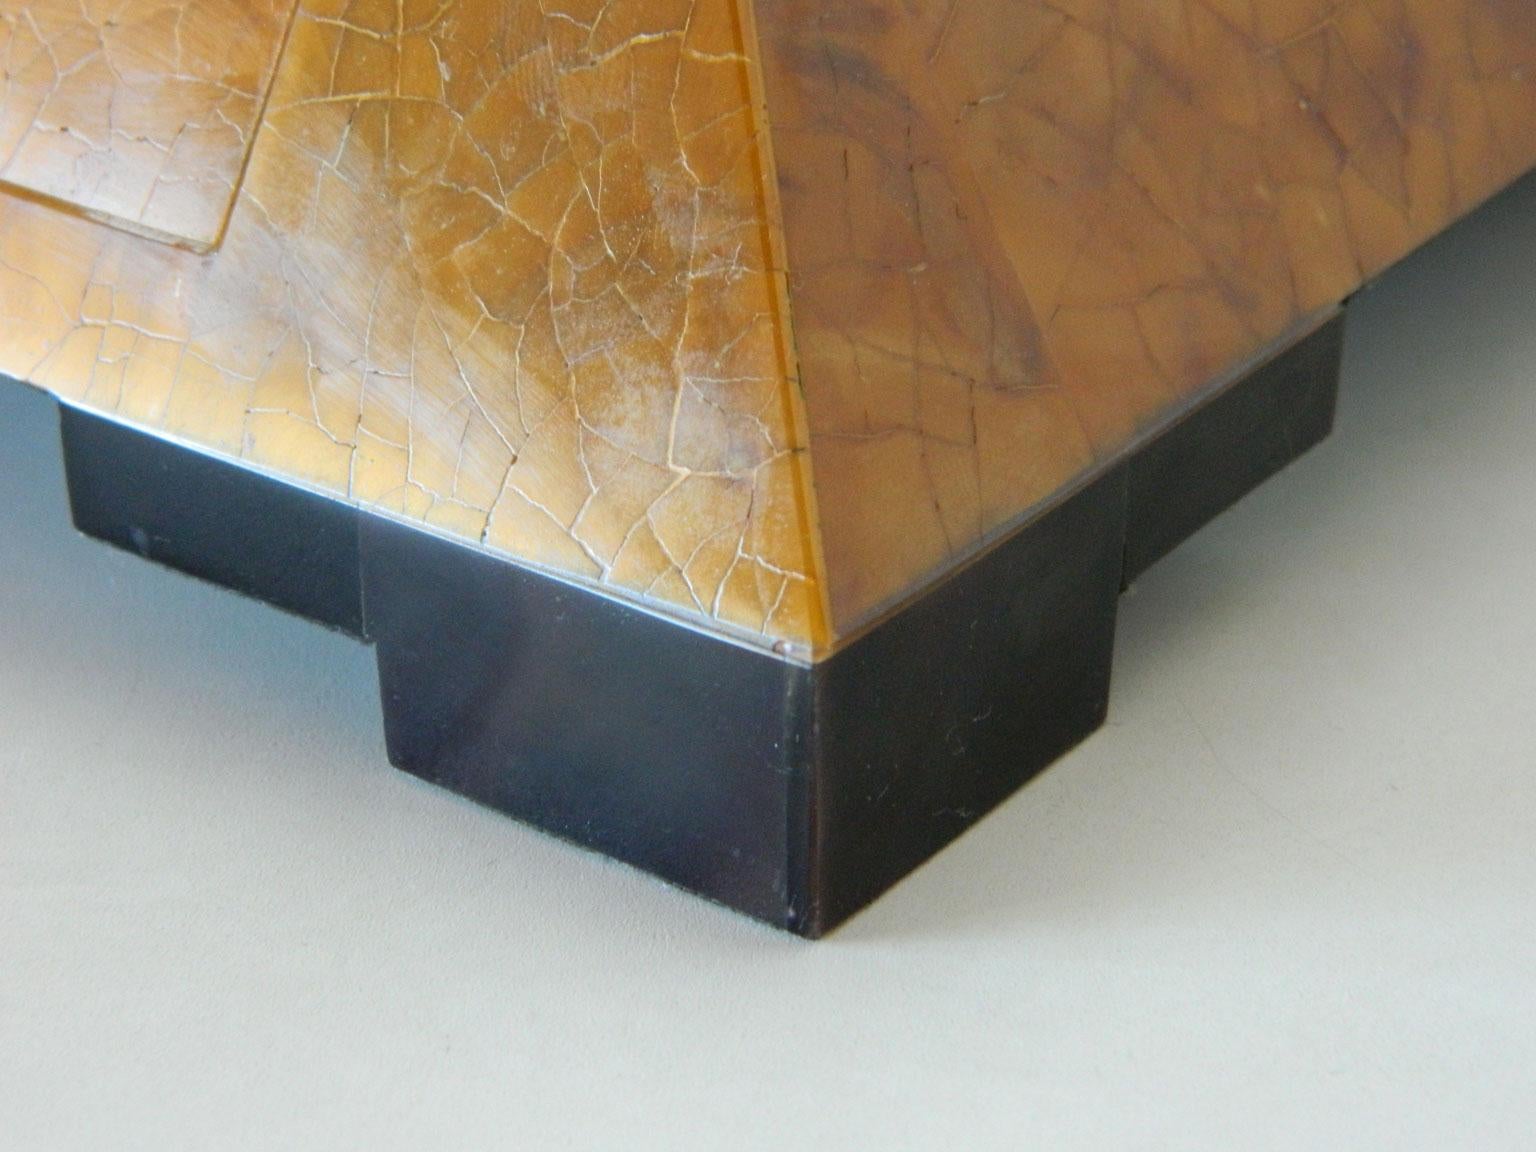 Decorative Pyramid Box in the Style of Maitland Smith 1